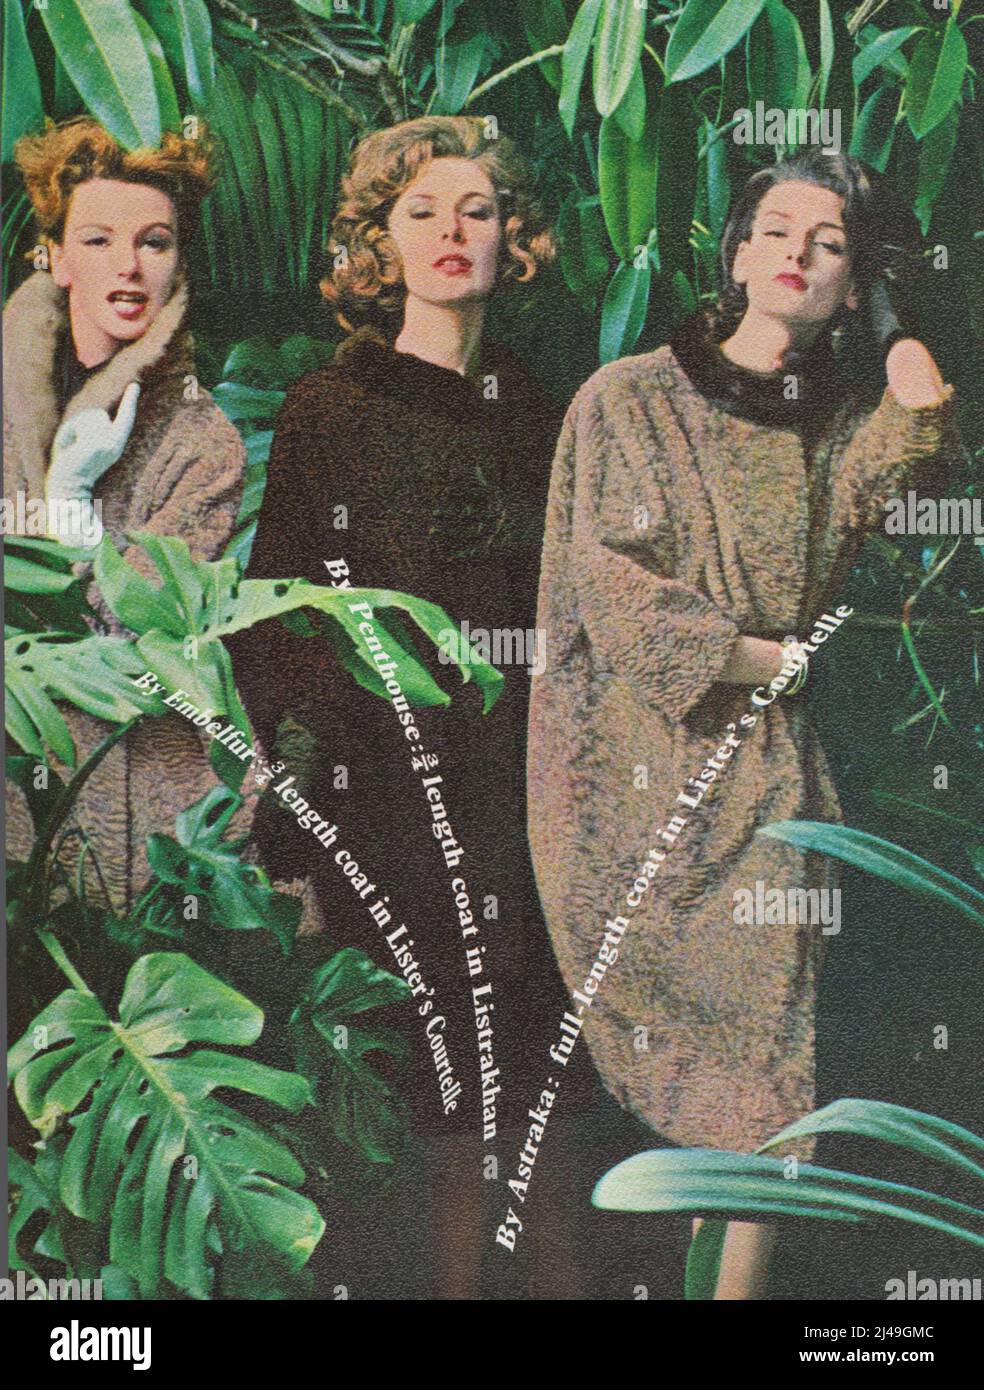 Lister & Co Ltd Bradford vintage fashion advertisement advert coats hats leopard coat 1960s winter coat Stock Photo